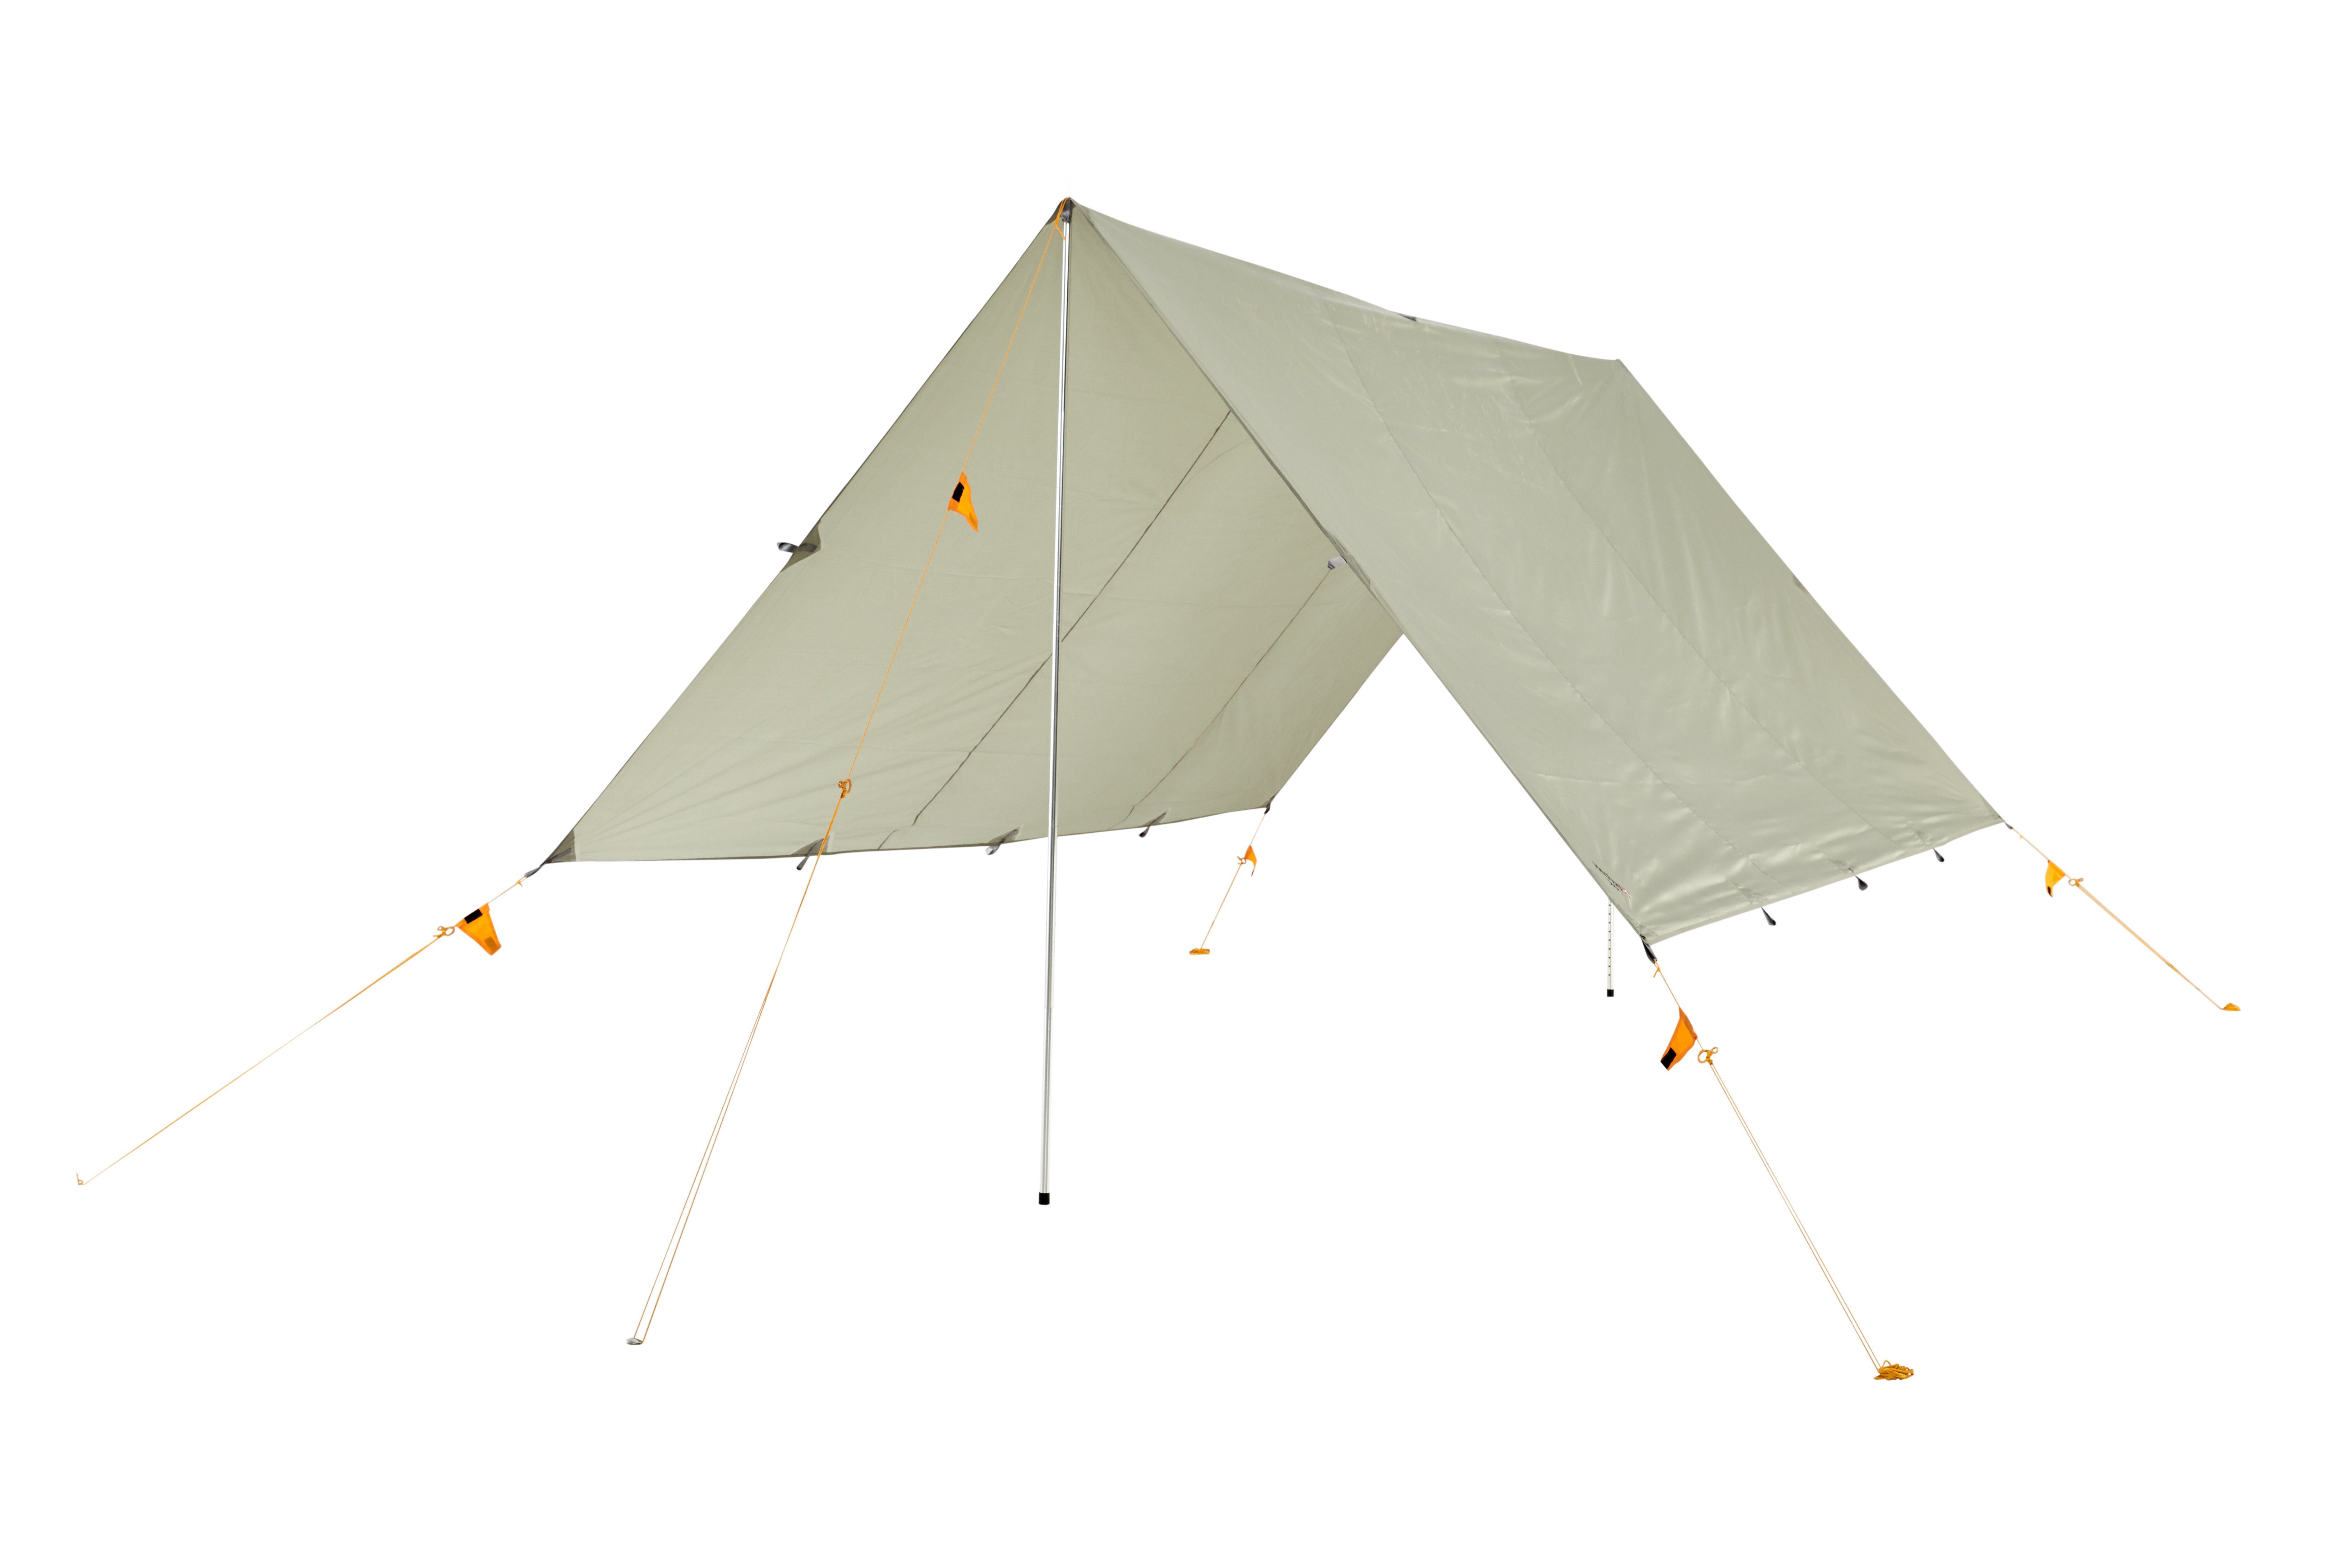 - 6 cm, Tents Line Tarp 435 x Tarp-Zelt 400 Travel Zeltdach, Personen: L - Wechsel Universal